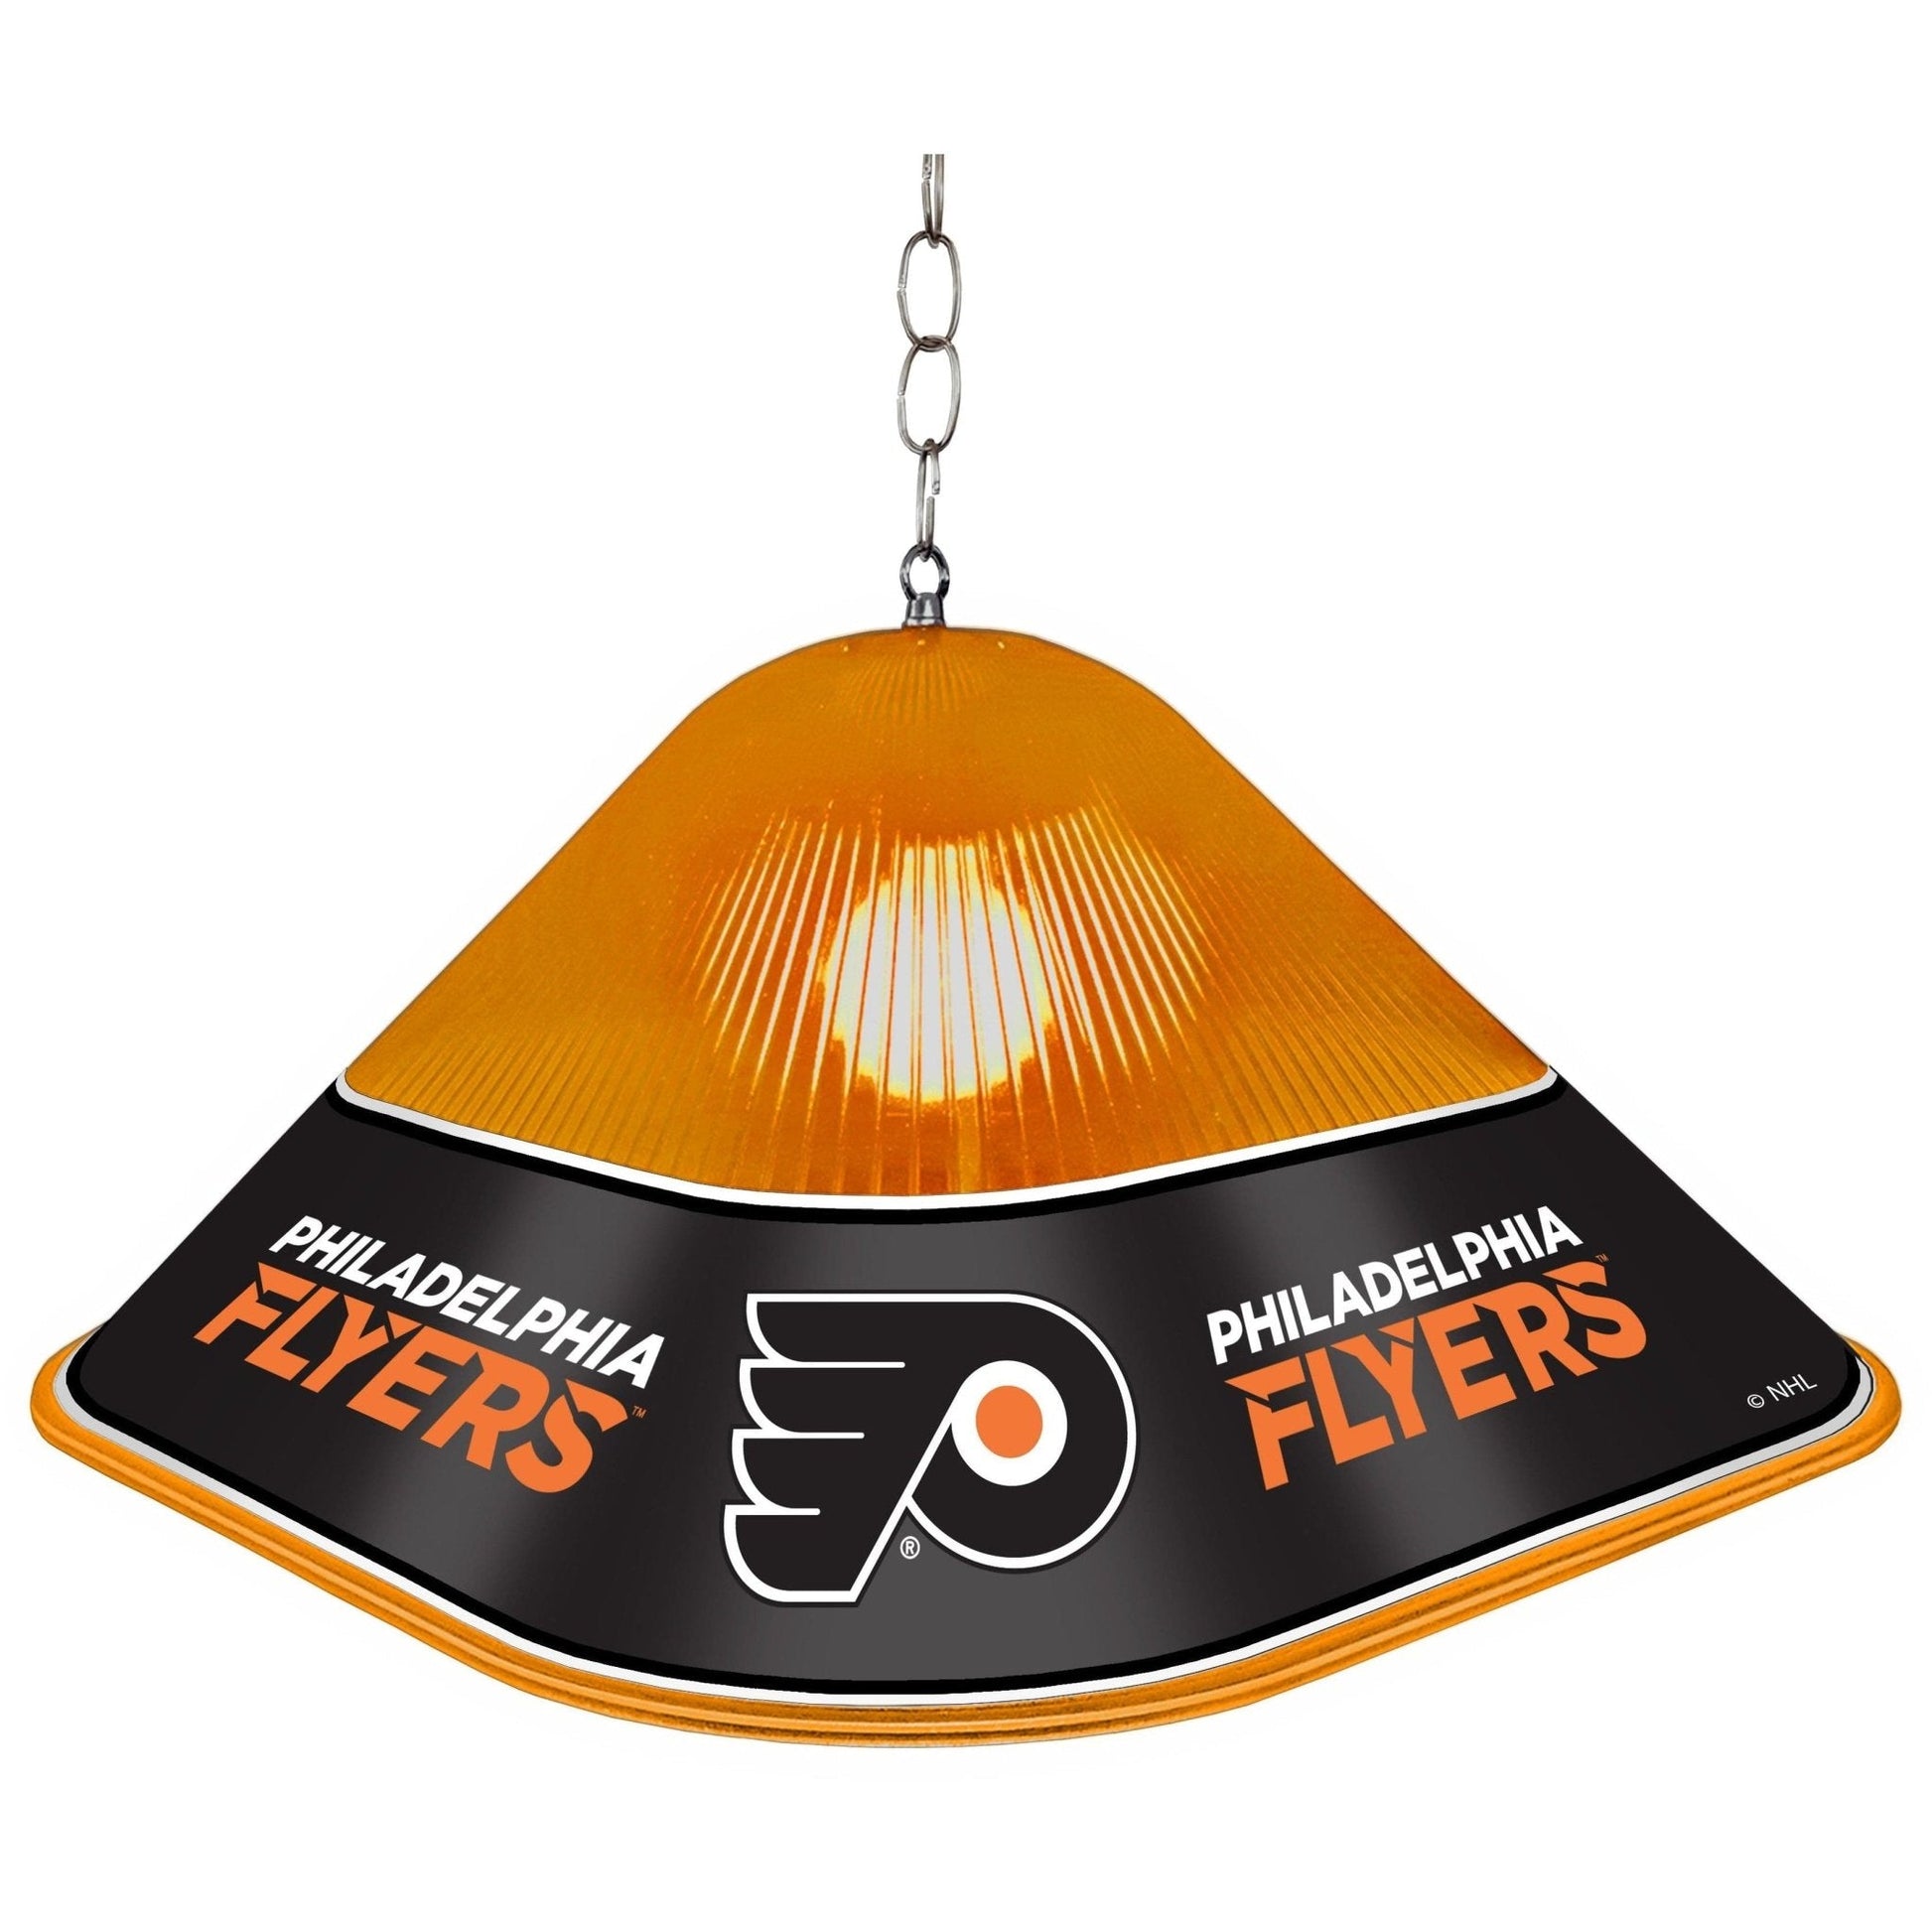 Philadelphia Flyers: Game Table Light - The Fan-Brand